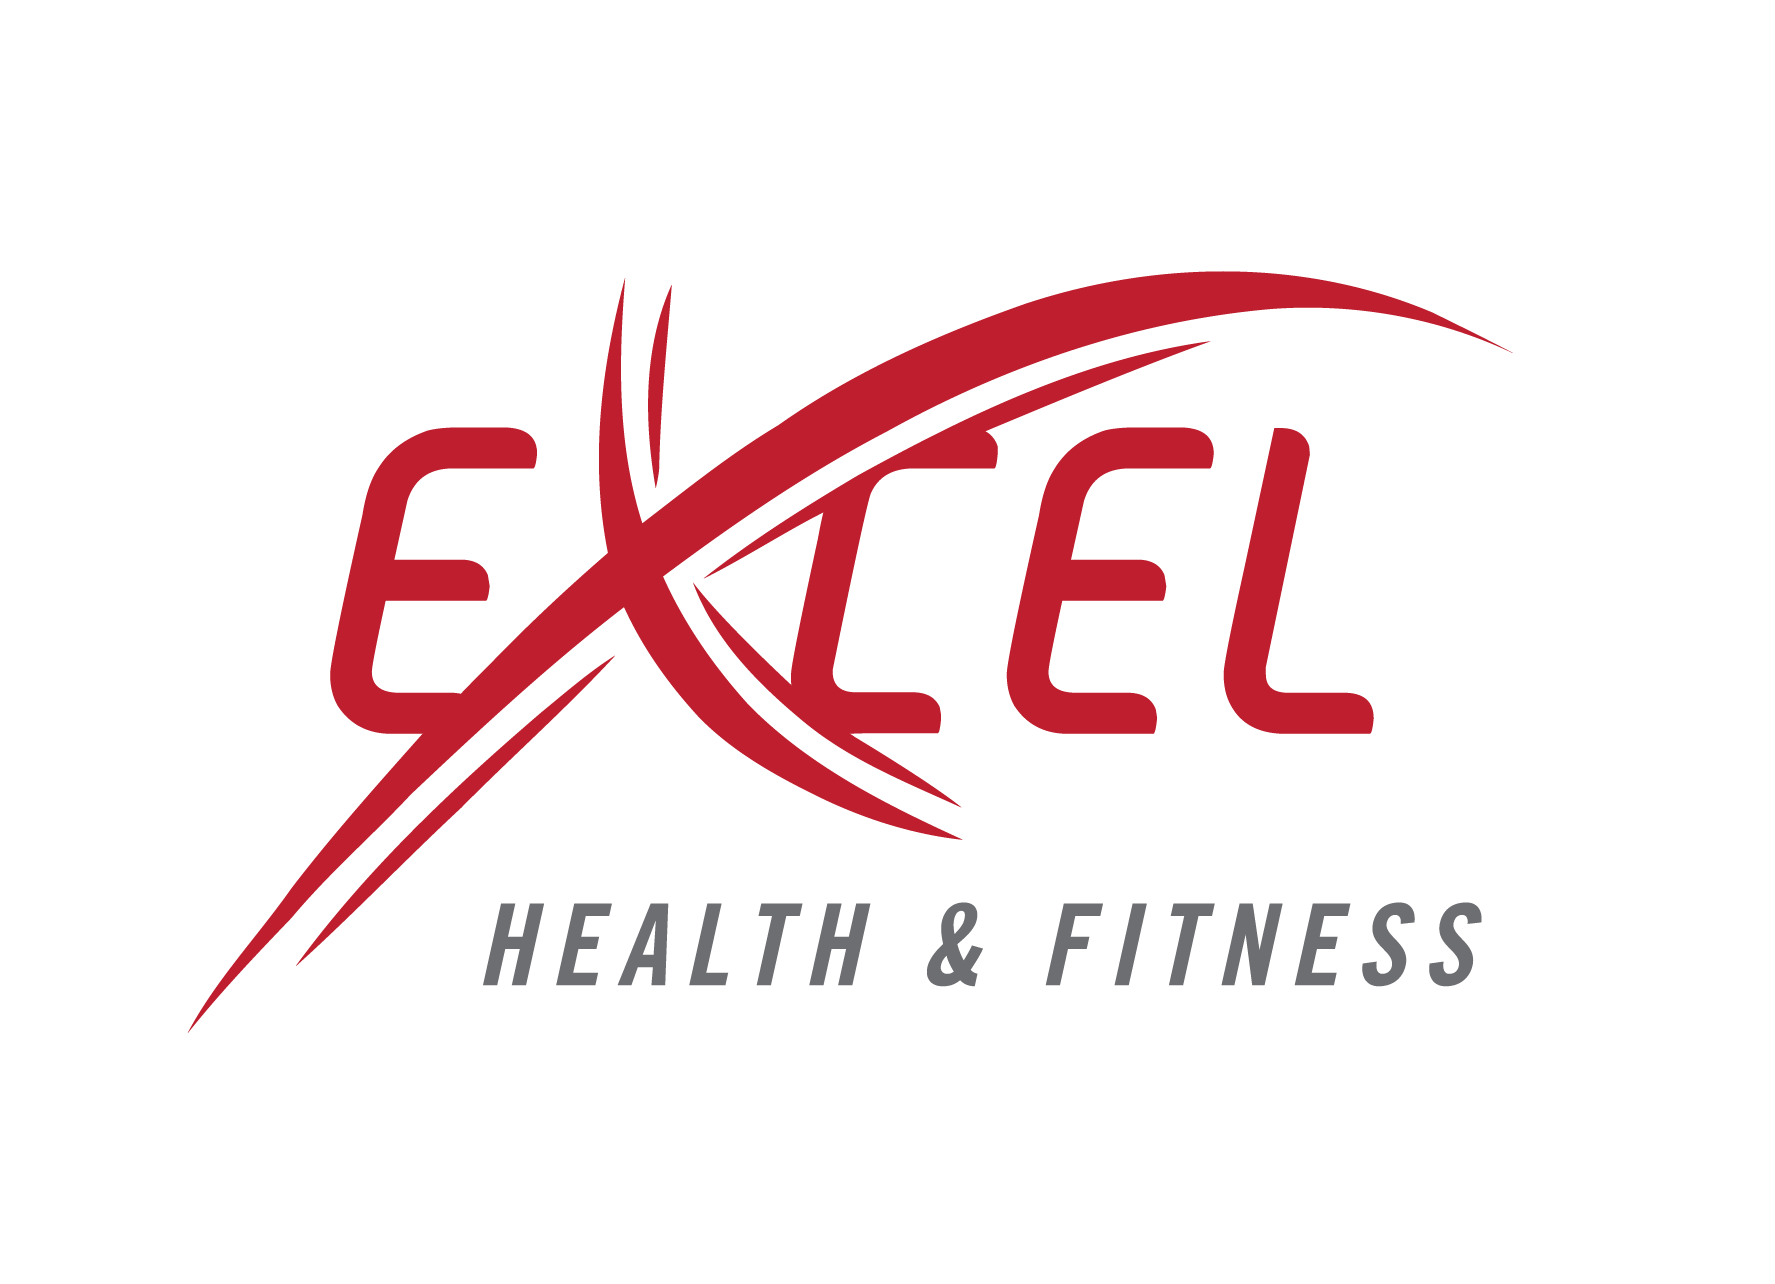 CrossFit Excel logo